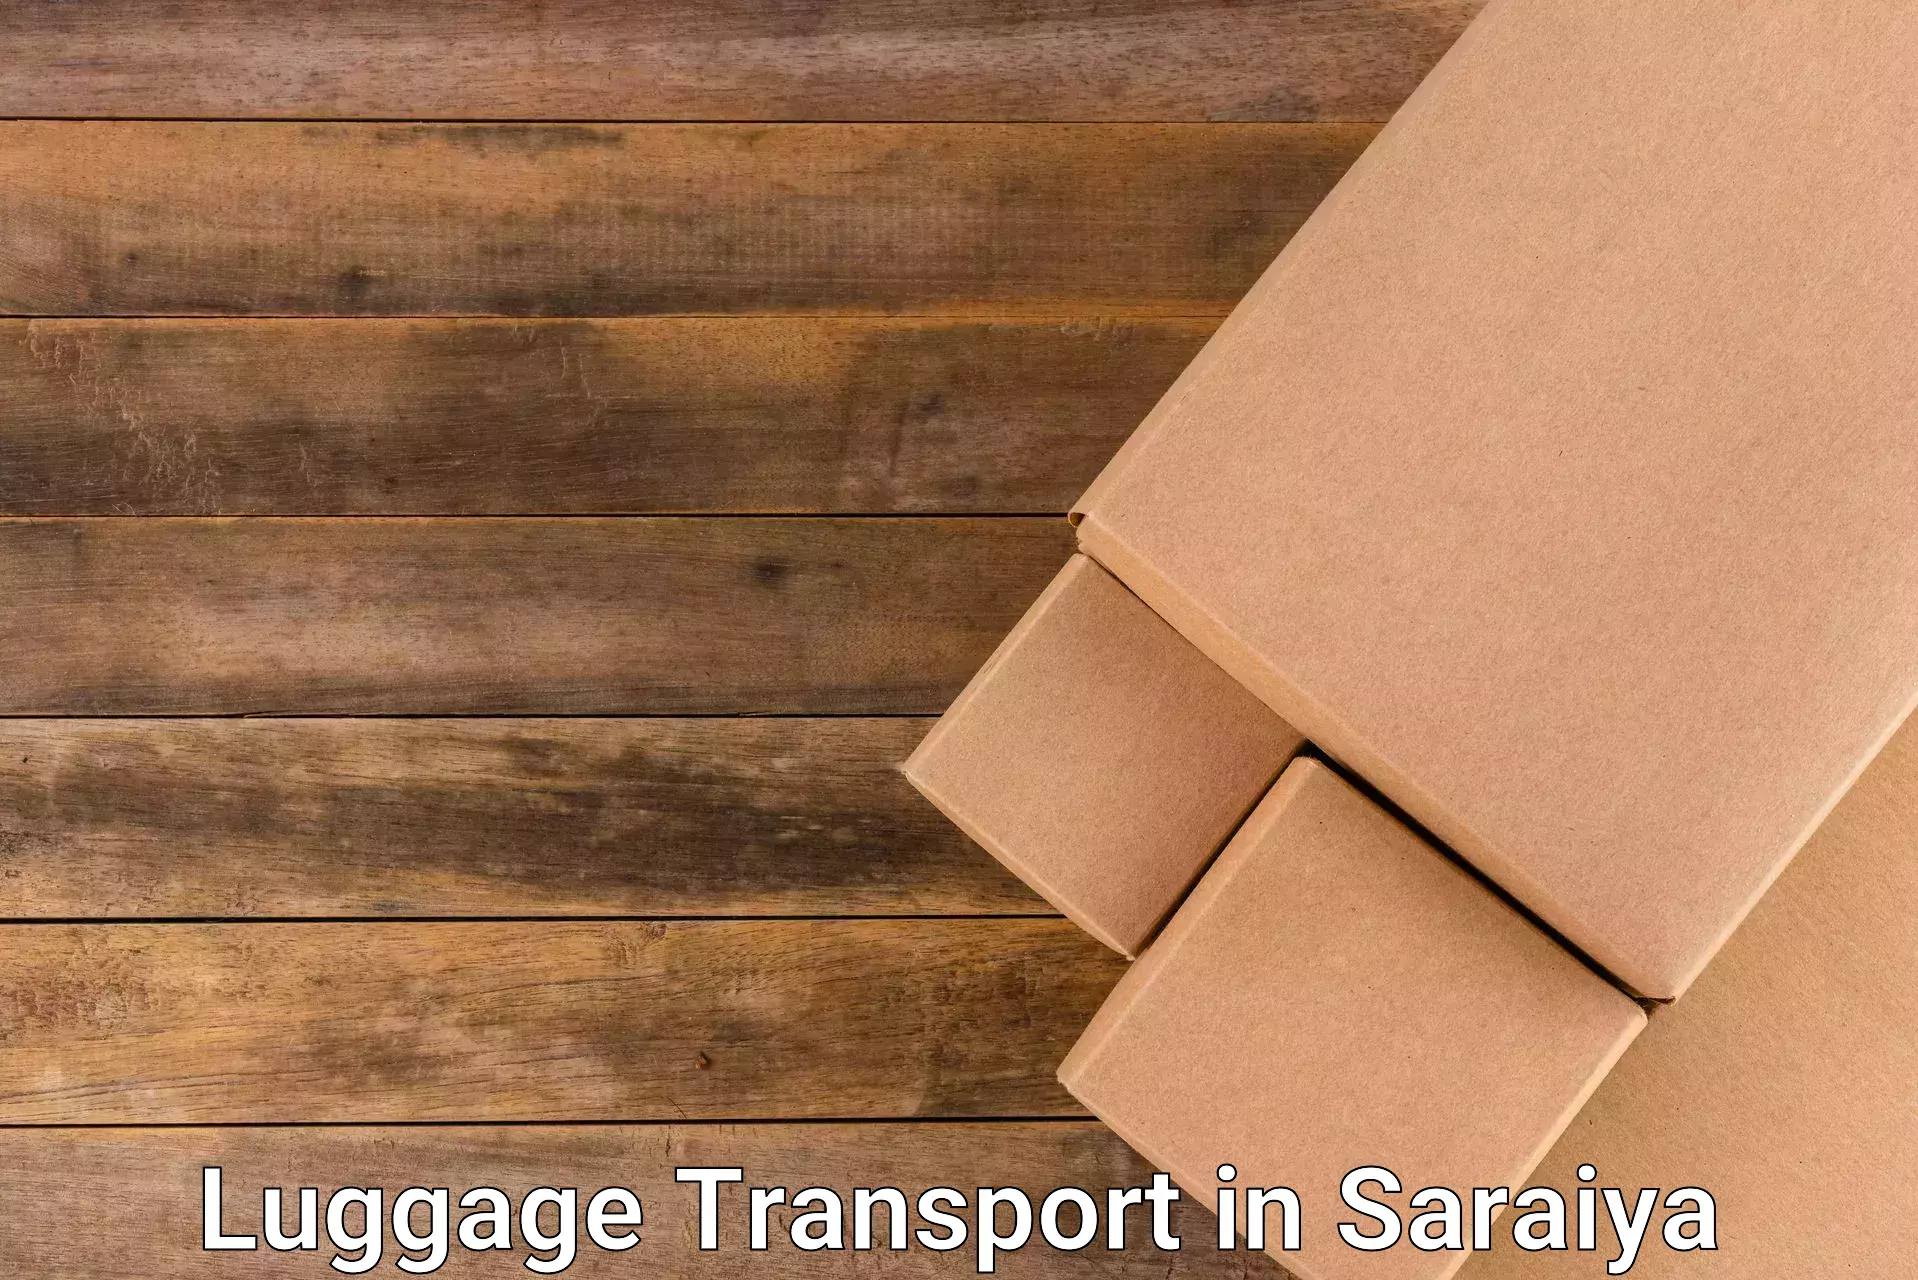 Baggage delivery management in Saraiya